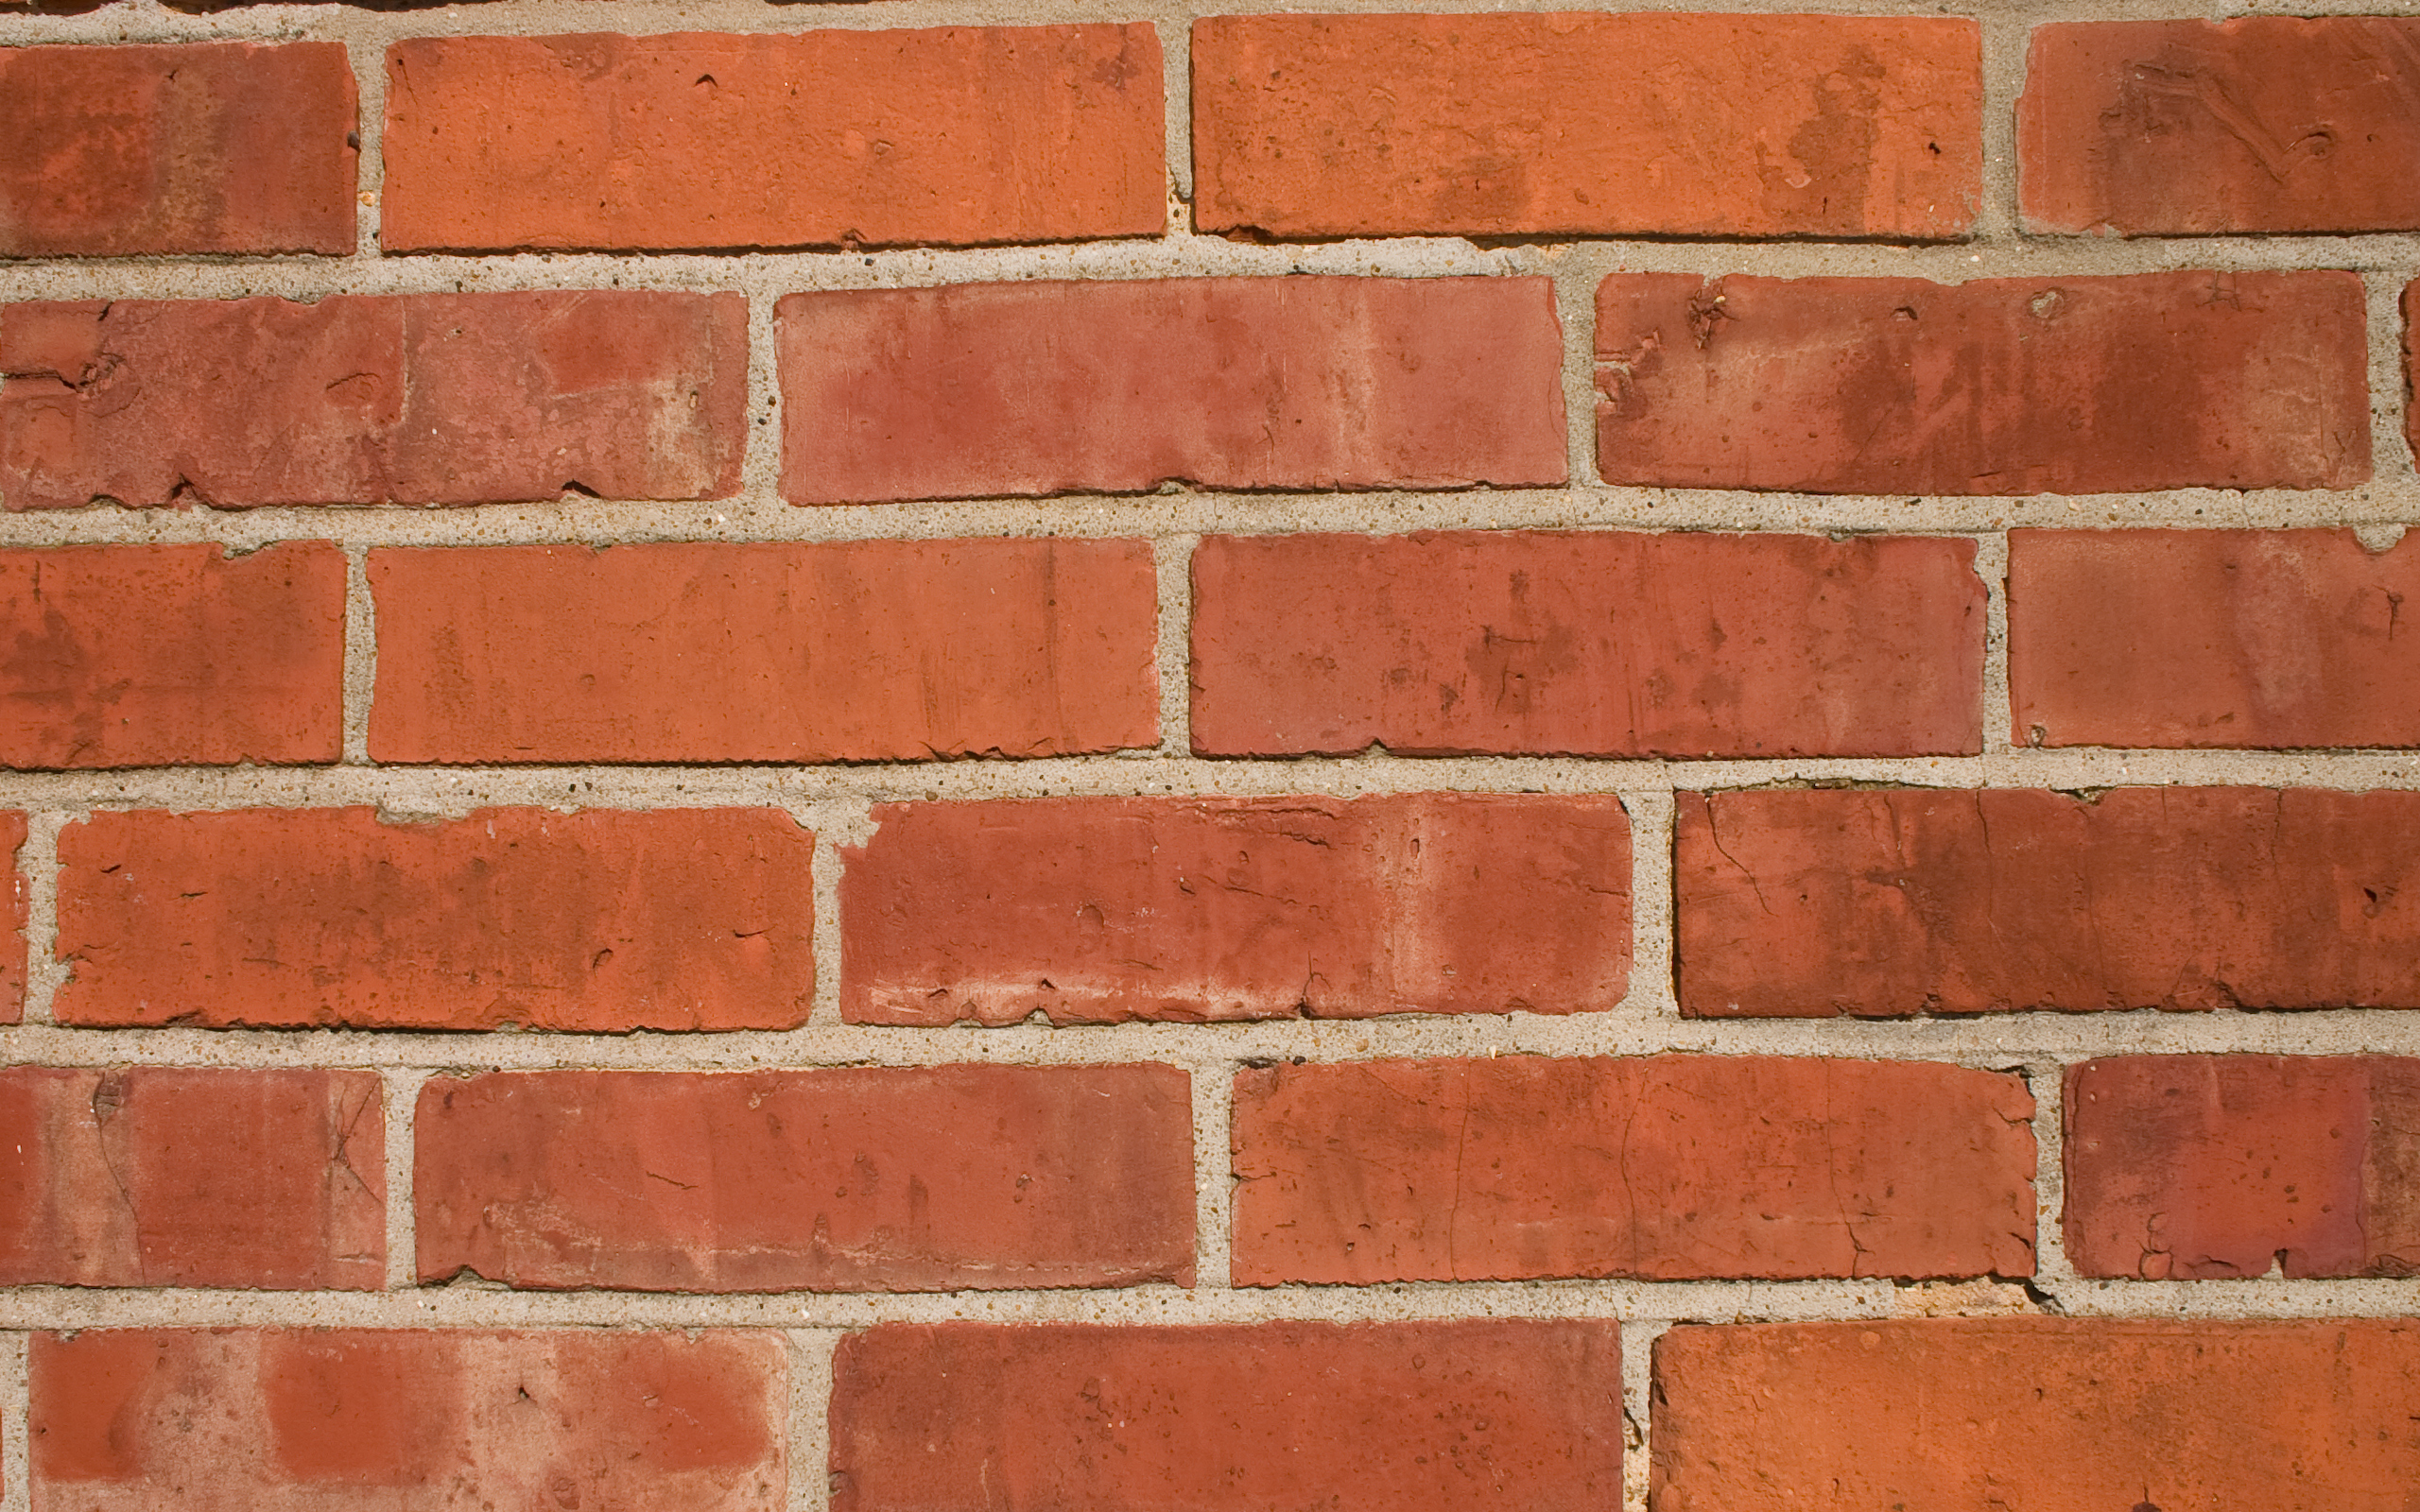 brick wall wallpaper,brickwork,brick,wall,bricklayer,orange